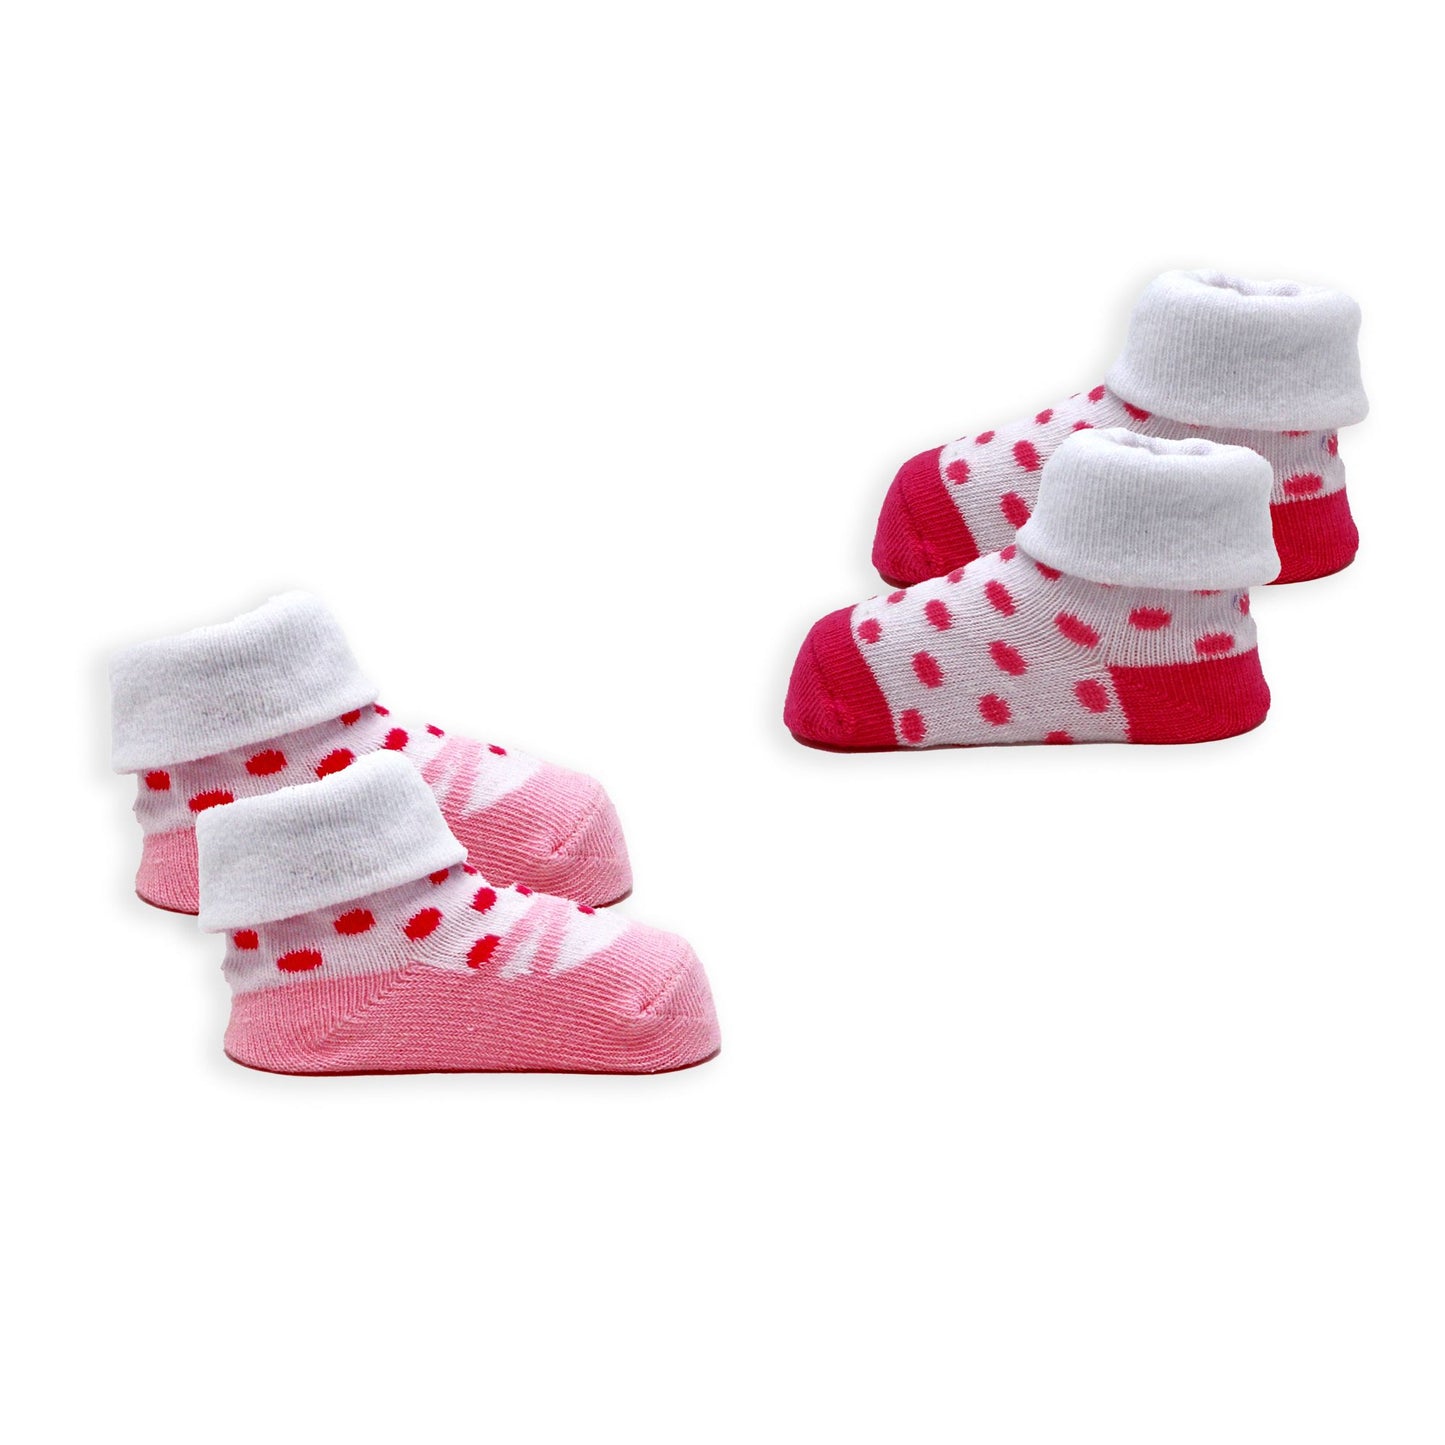 Baby's Socks - 2 Pack Pink